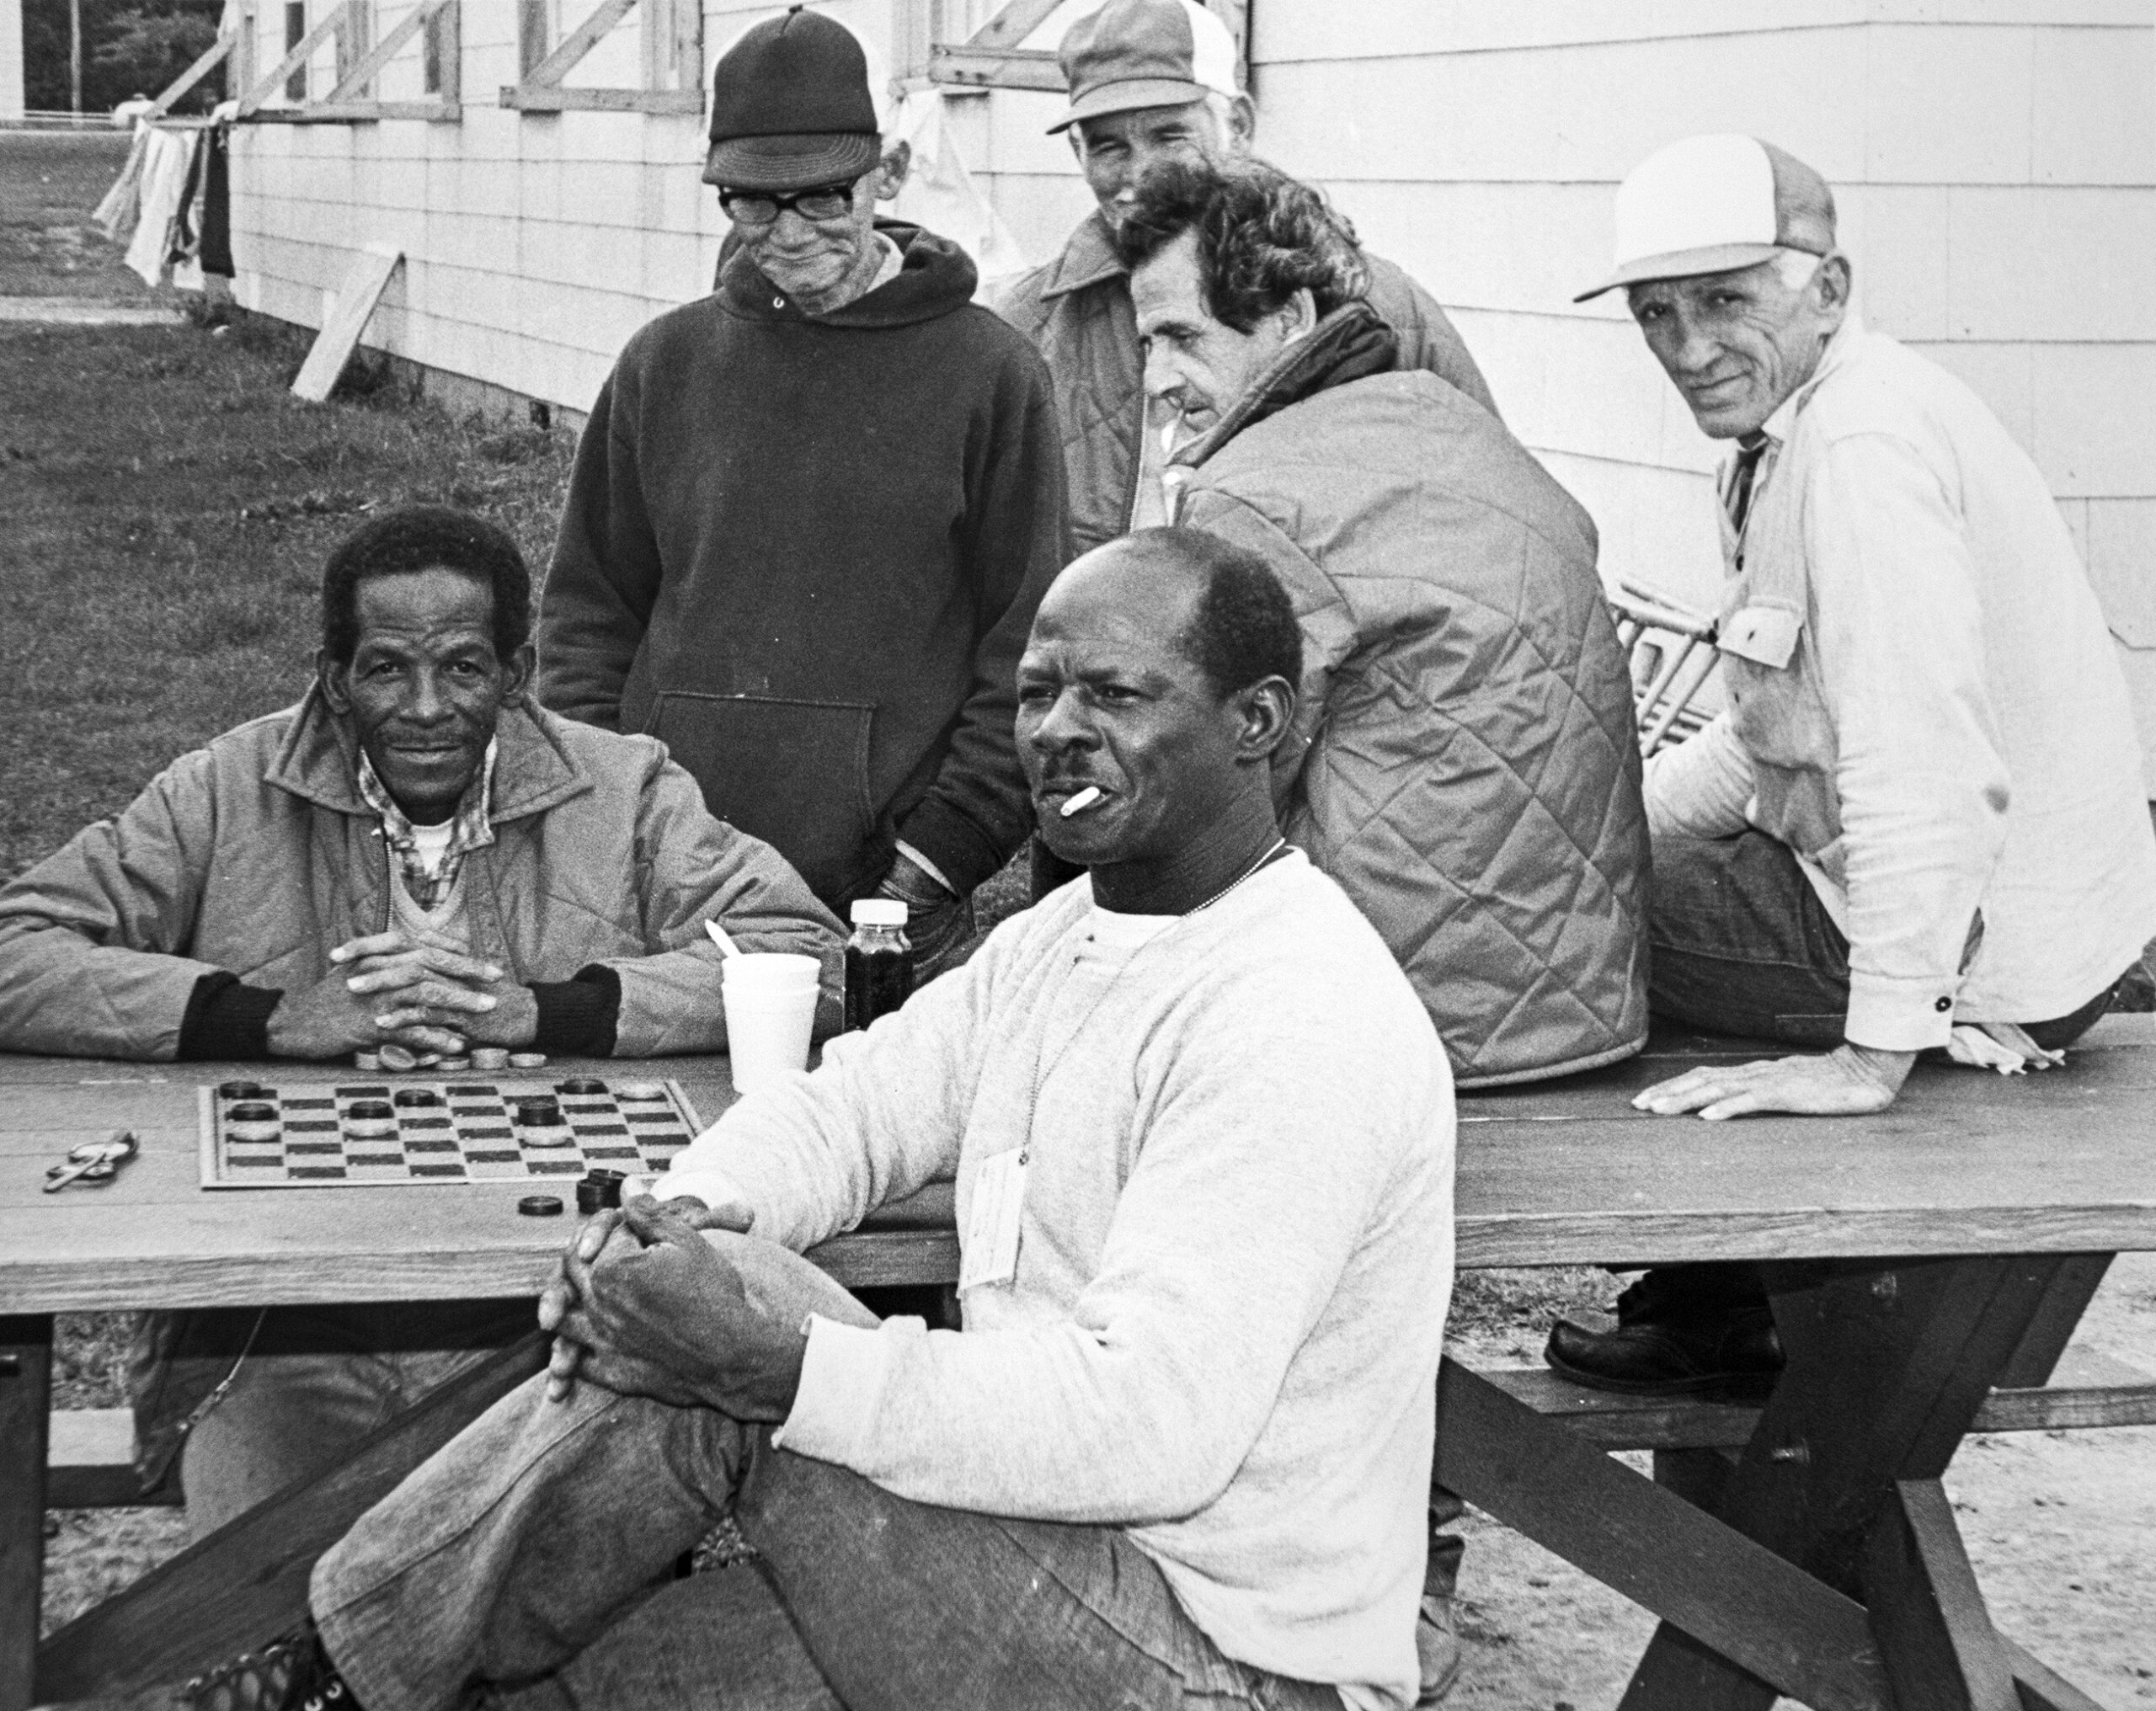 Cuban refugees play checkers at a picnic table